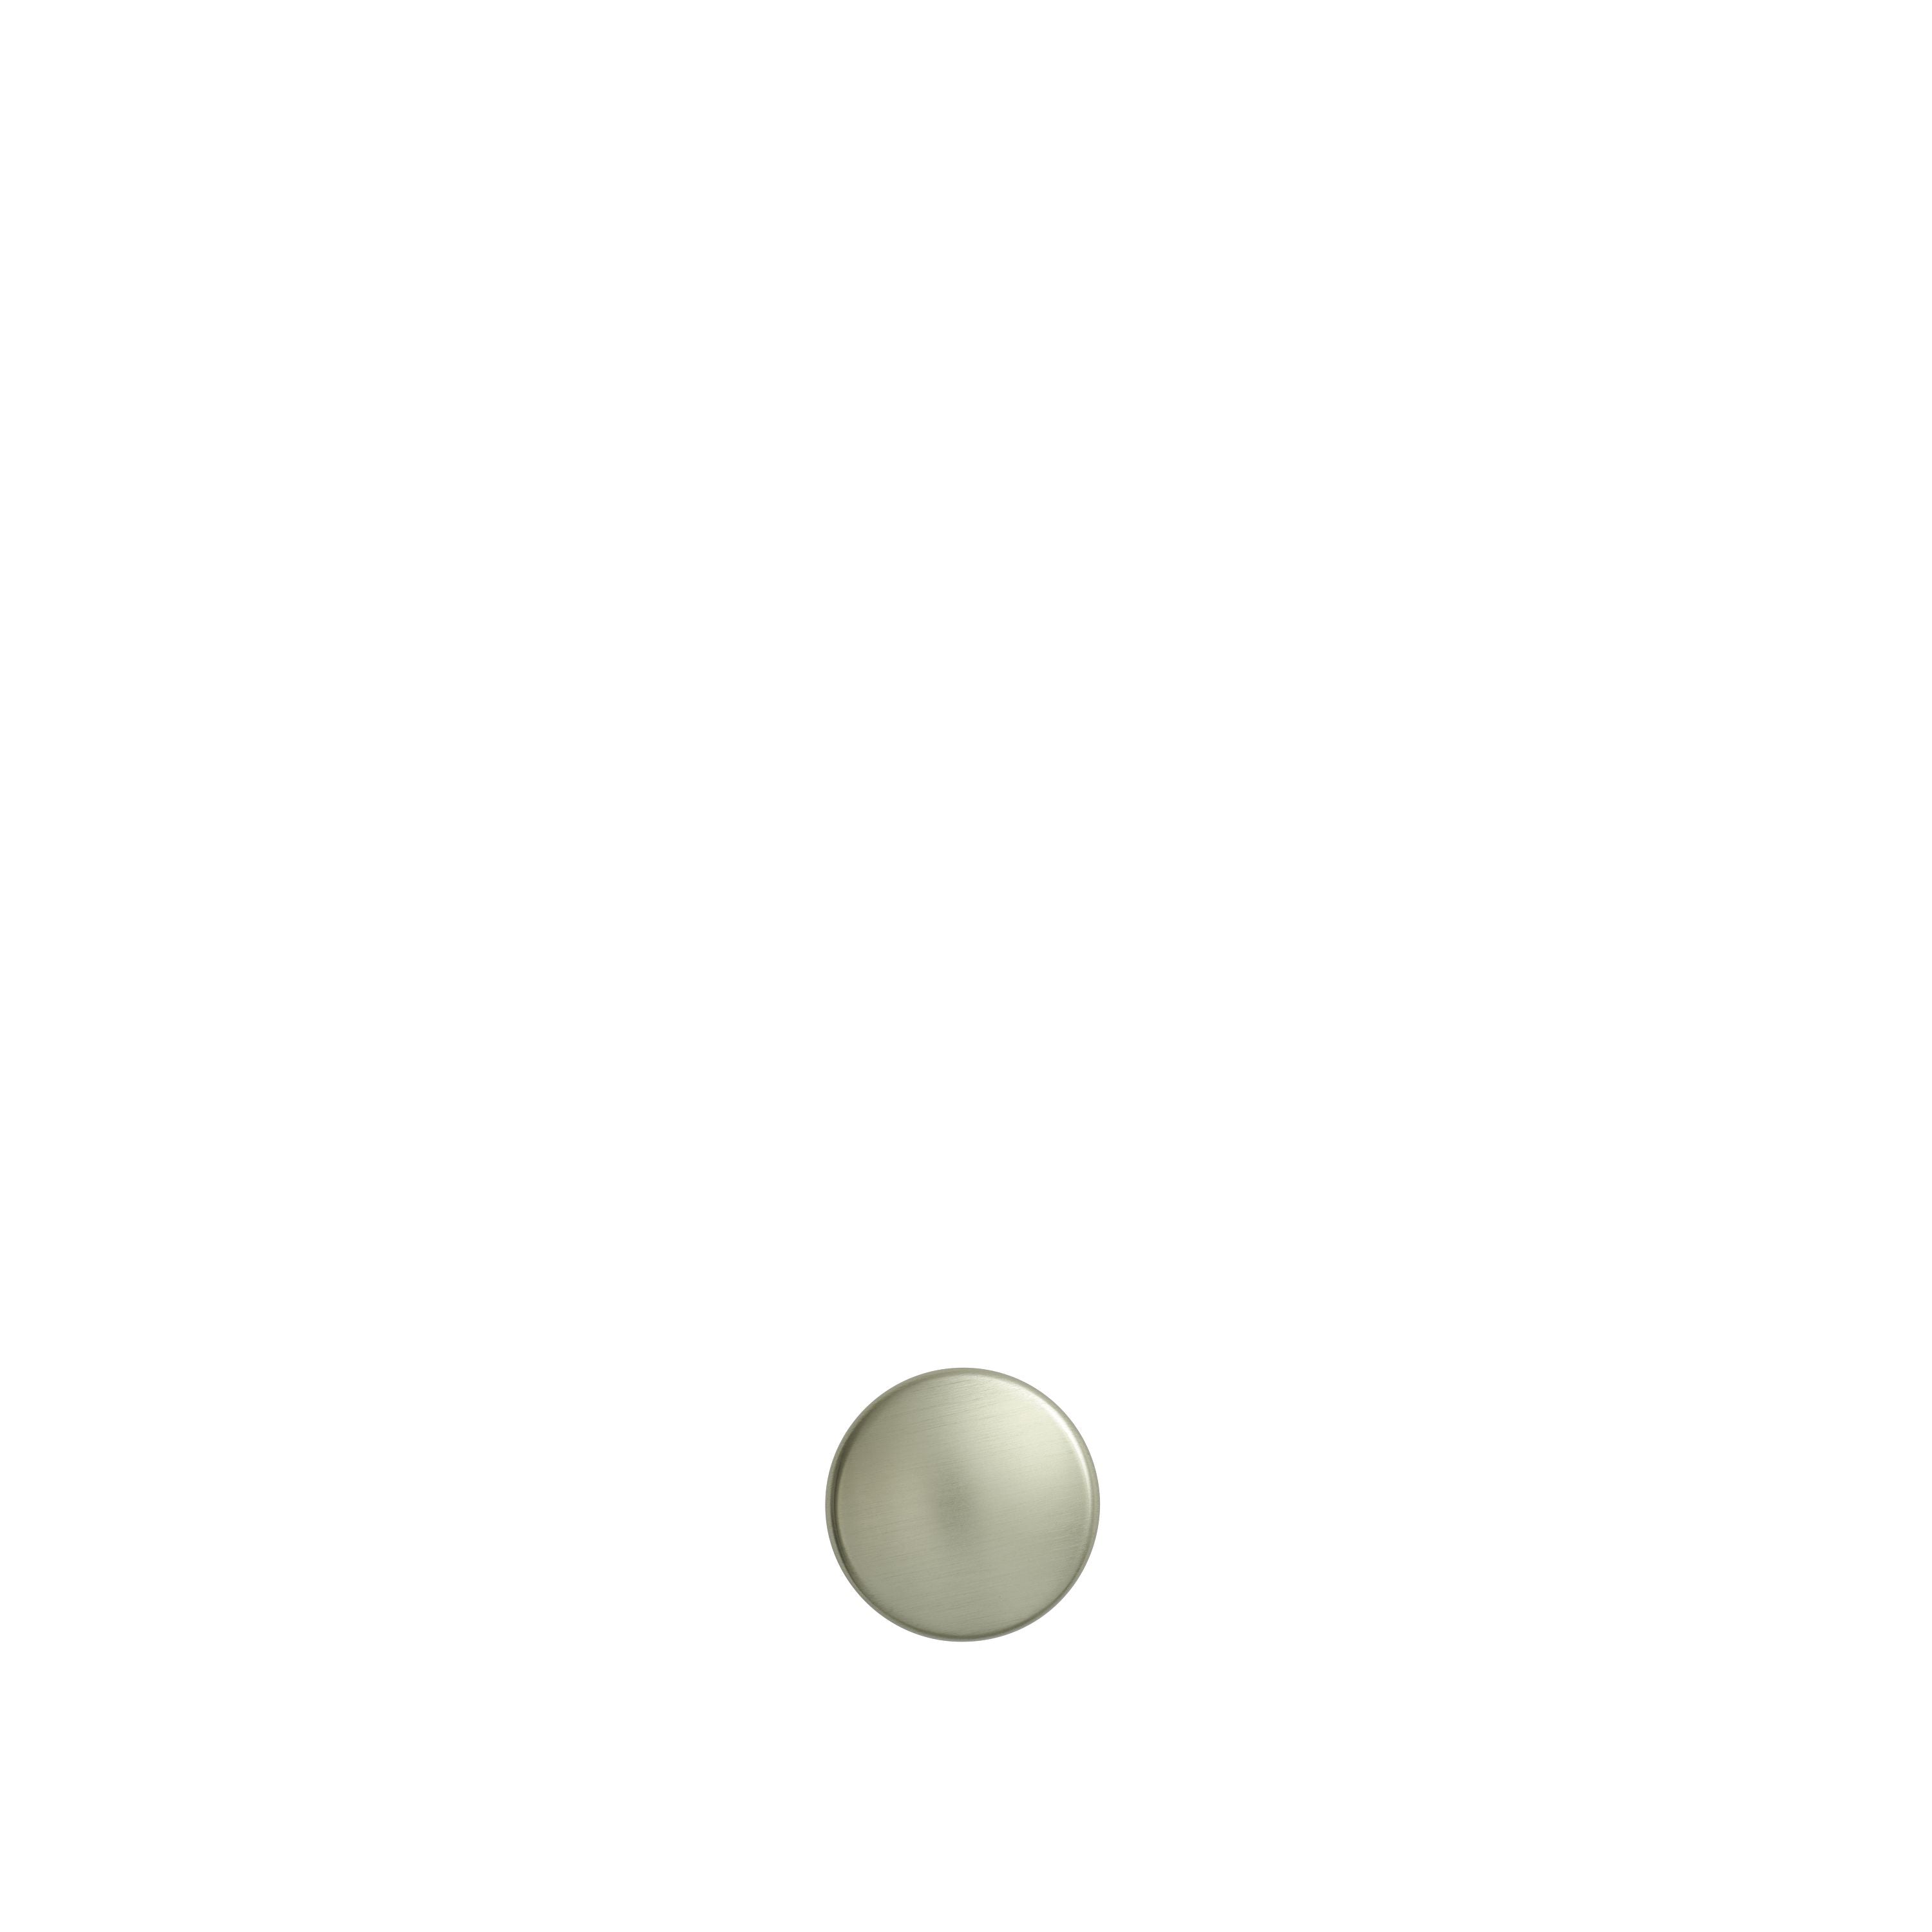 Muuto punti in metallo verde chiaro, Ø 2,7 cm